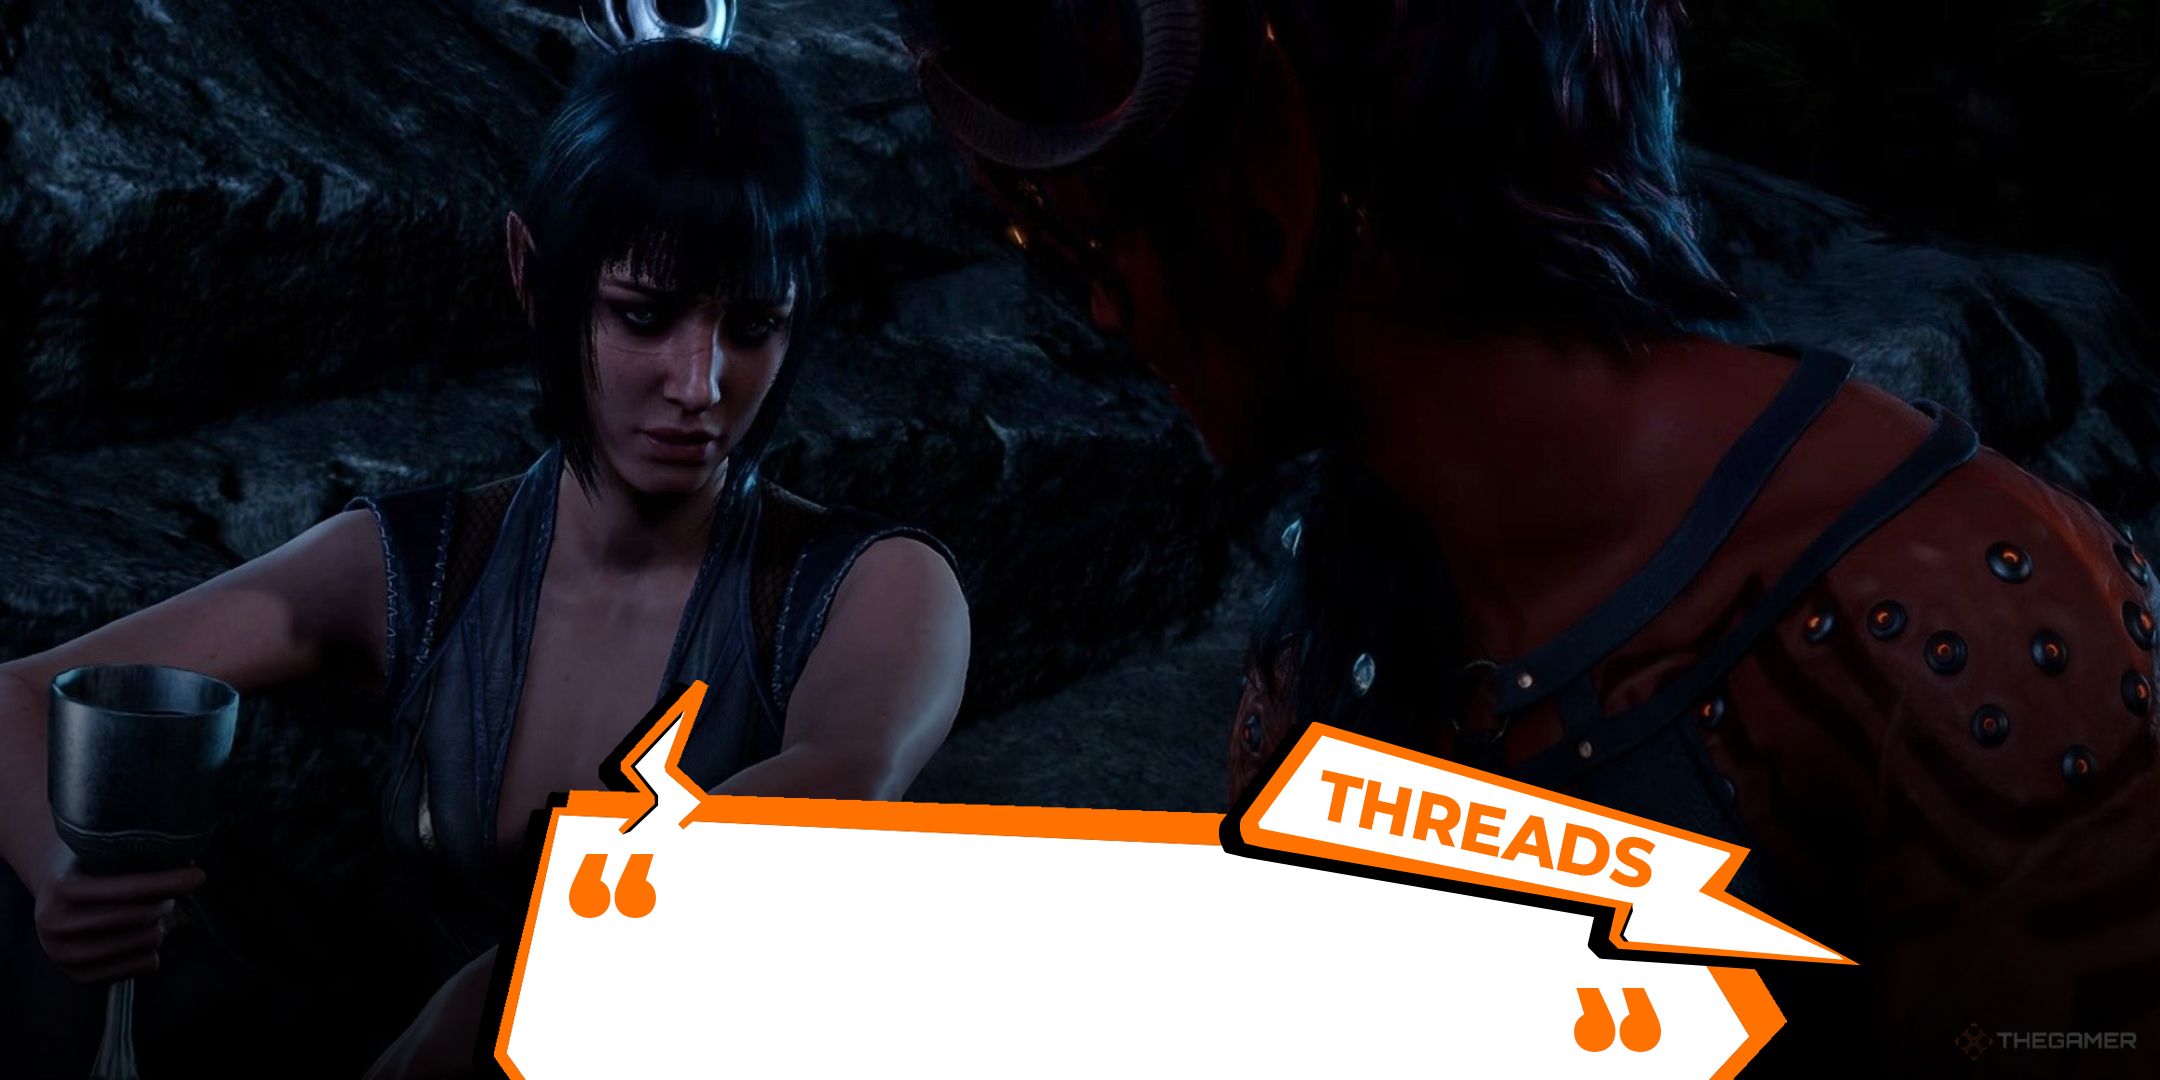 Shadowheart and Karlach in Baldur's Gate 3 with TheGamer's threads logo superimposed